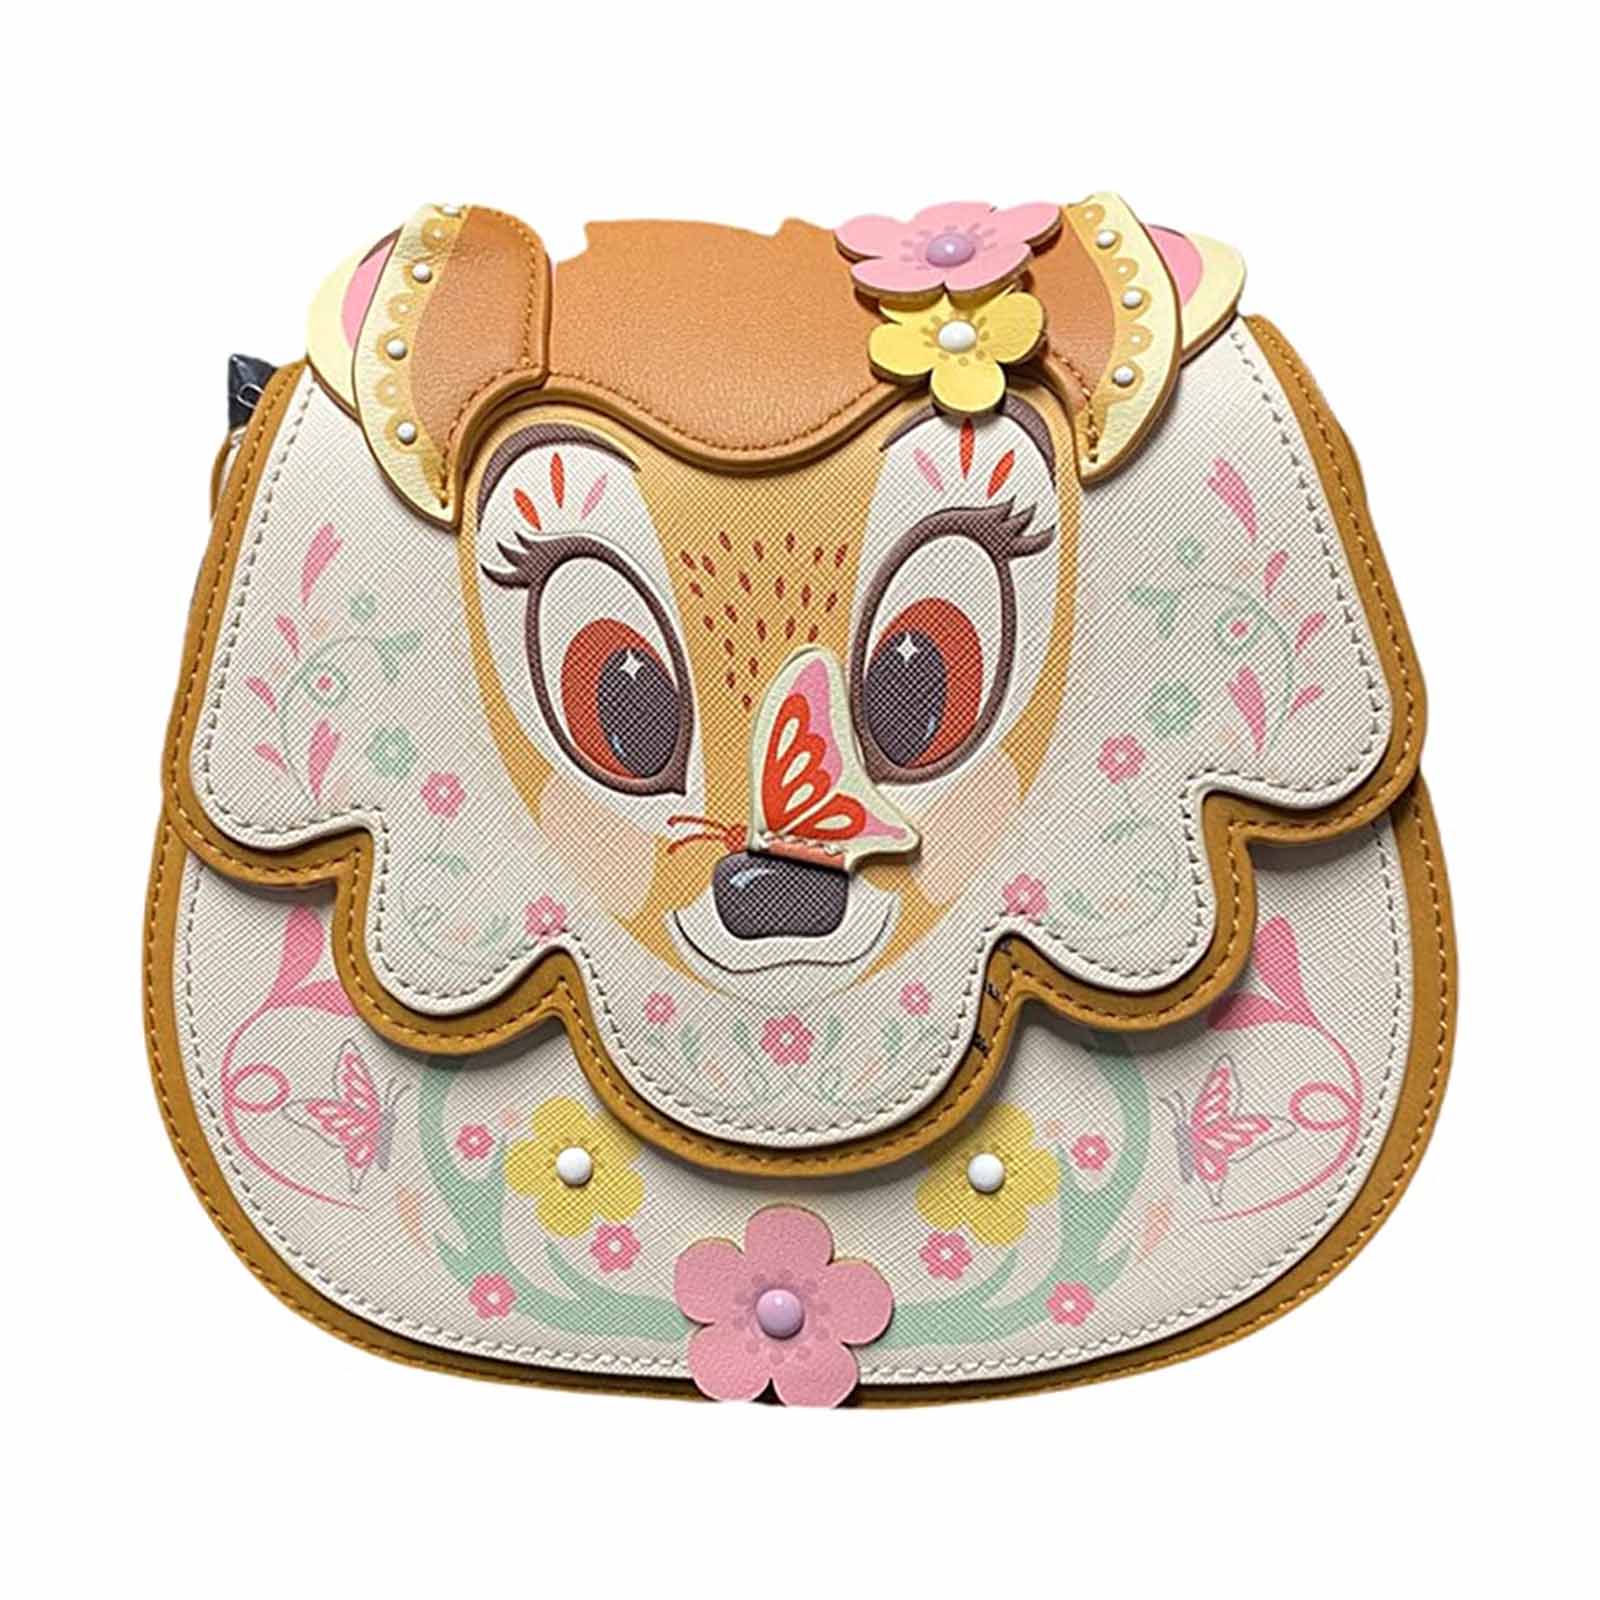 Cute Nicole Lee Puppy Cupcake Crossbody Bag!🧁 🐶🐾💕 | Bags, Crossbody bag,  Puppy cupcakes